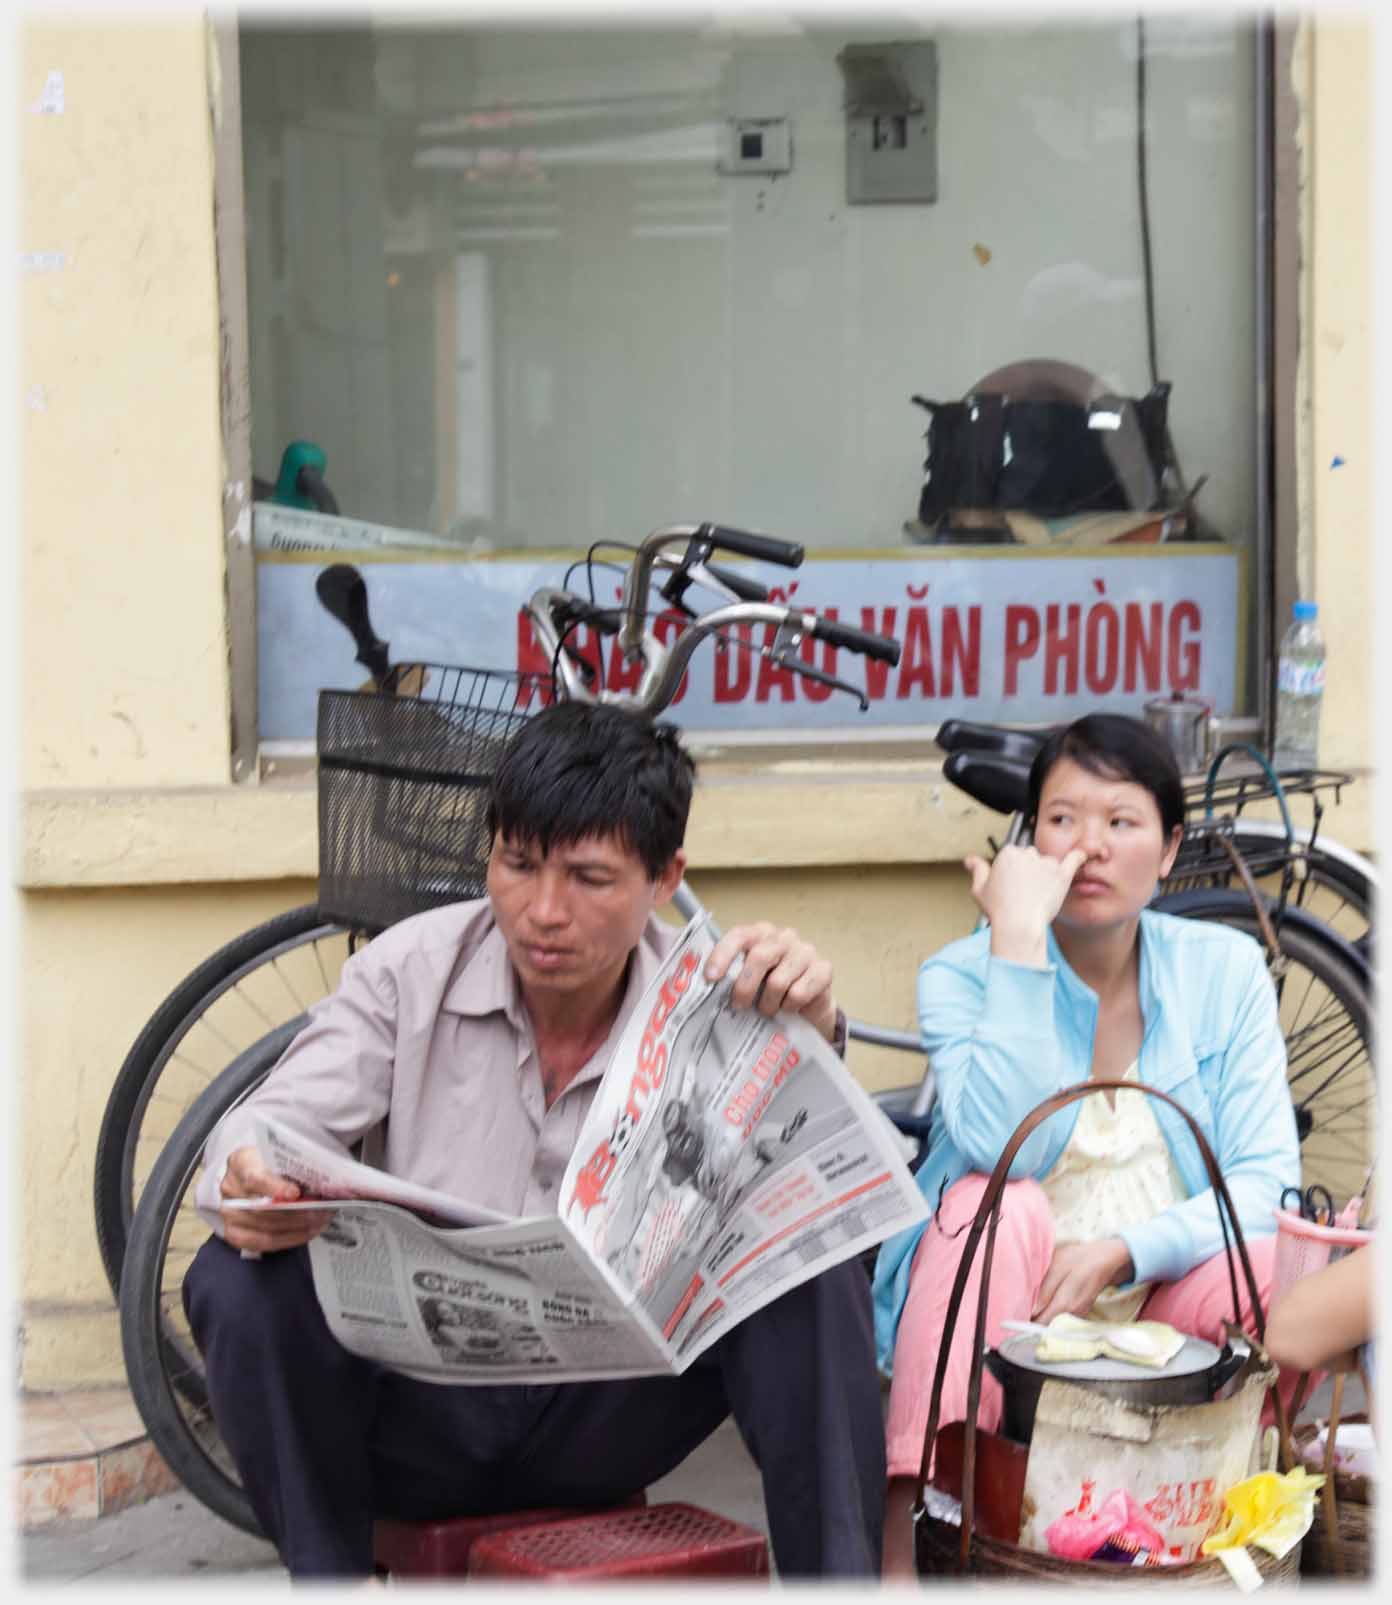 Man sitting reading newspaper, woman sitting behind him.